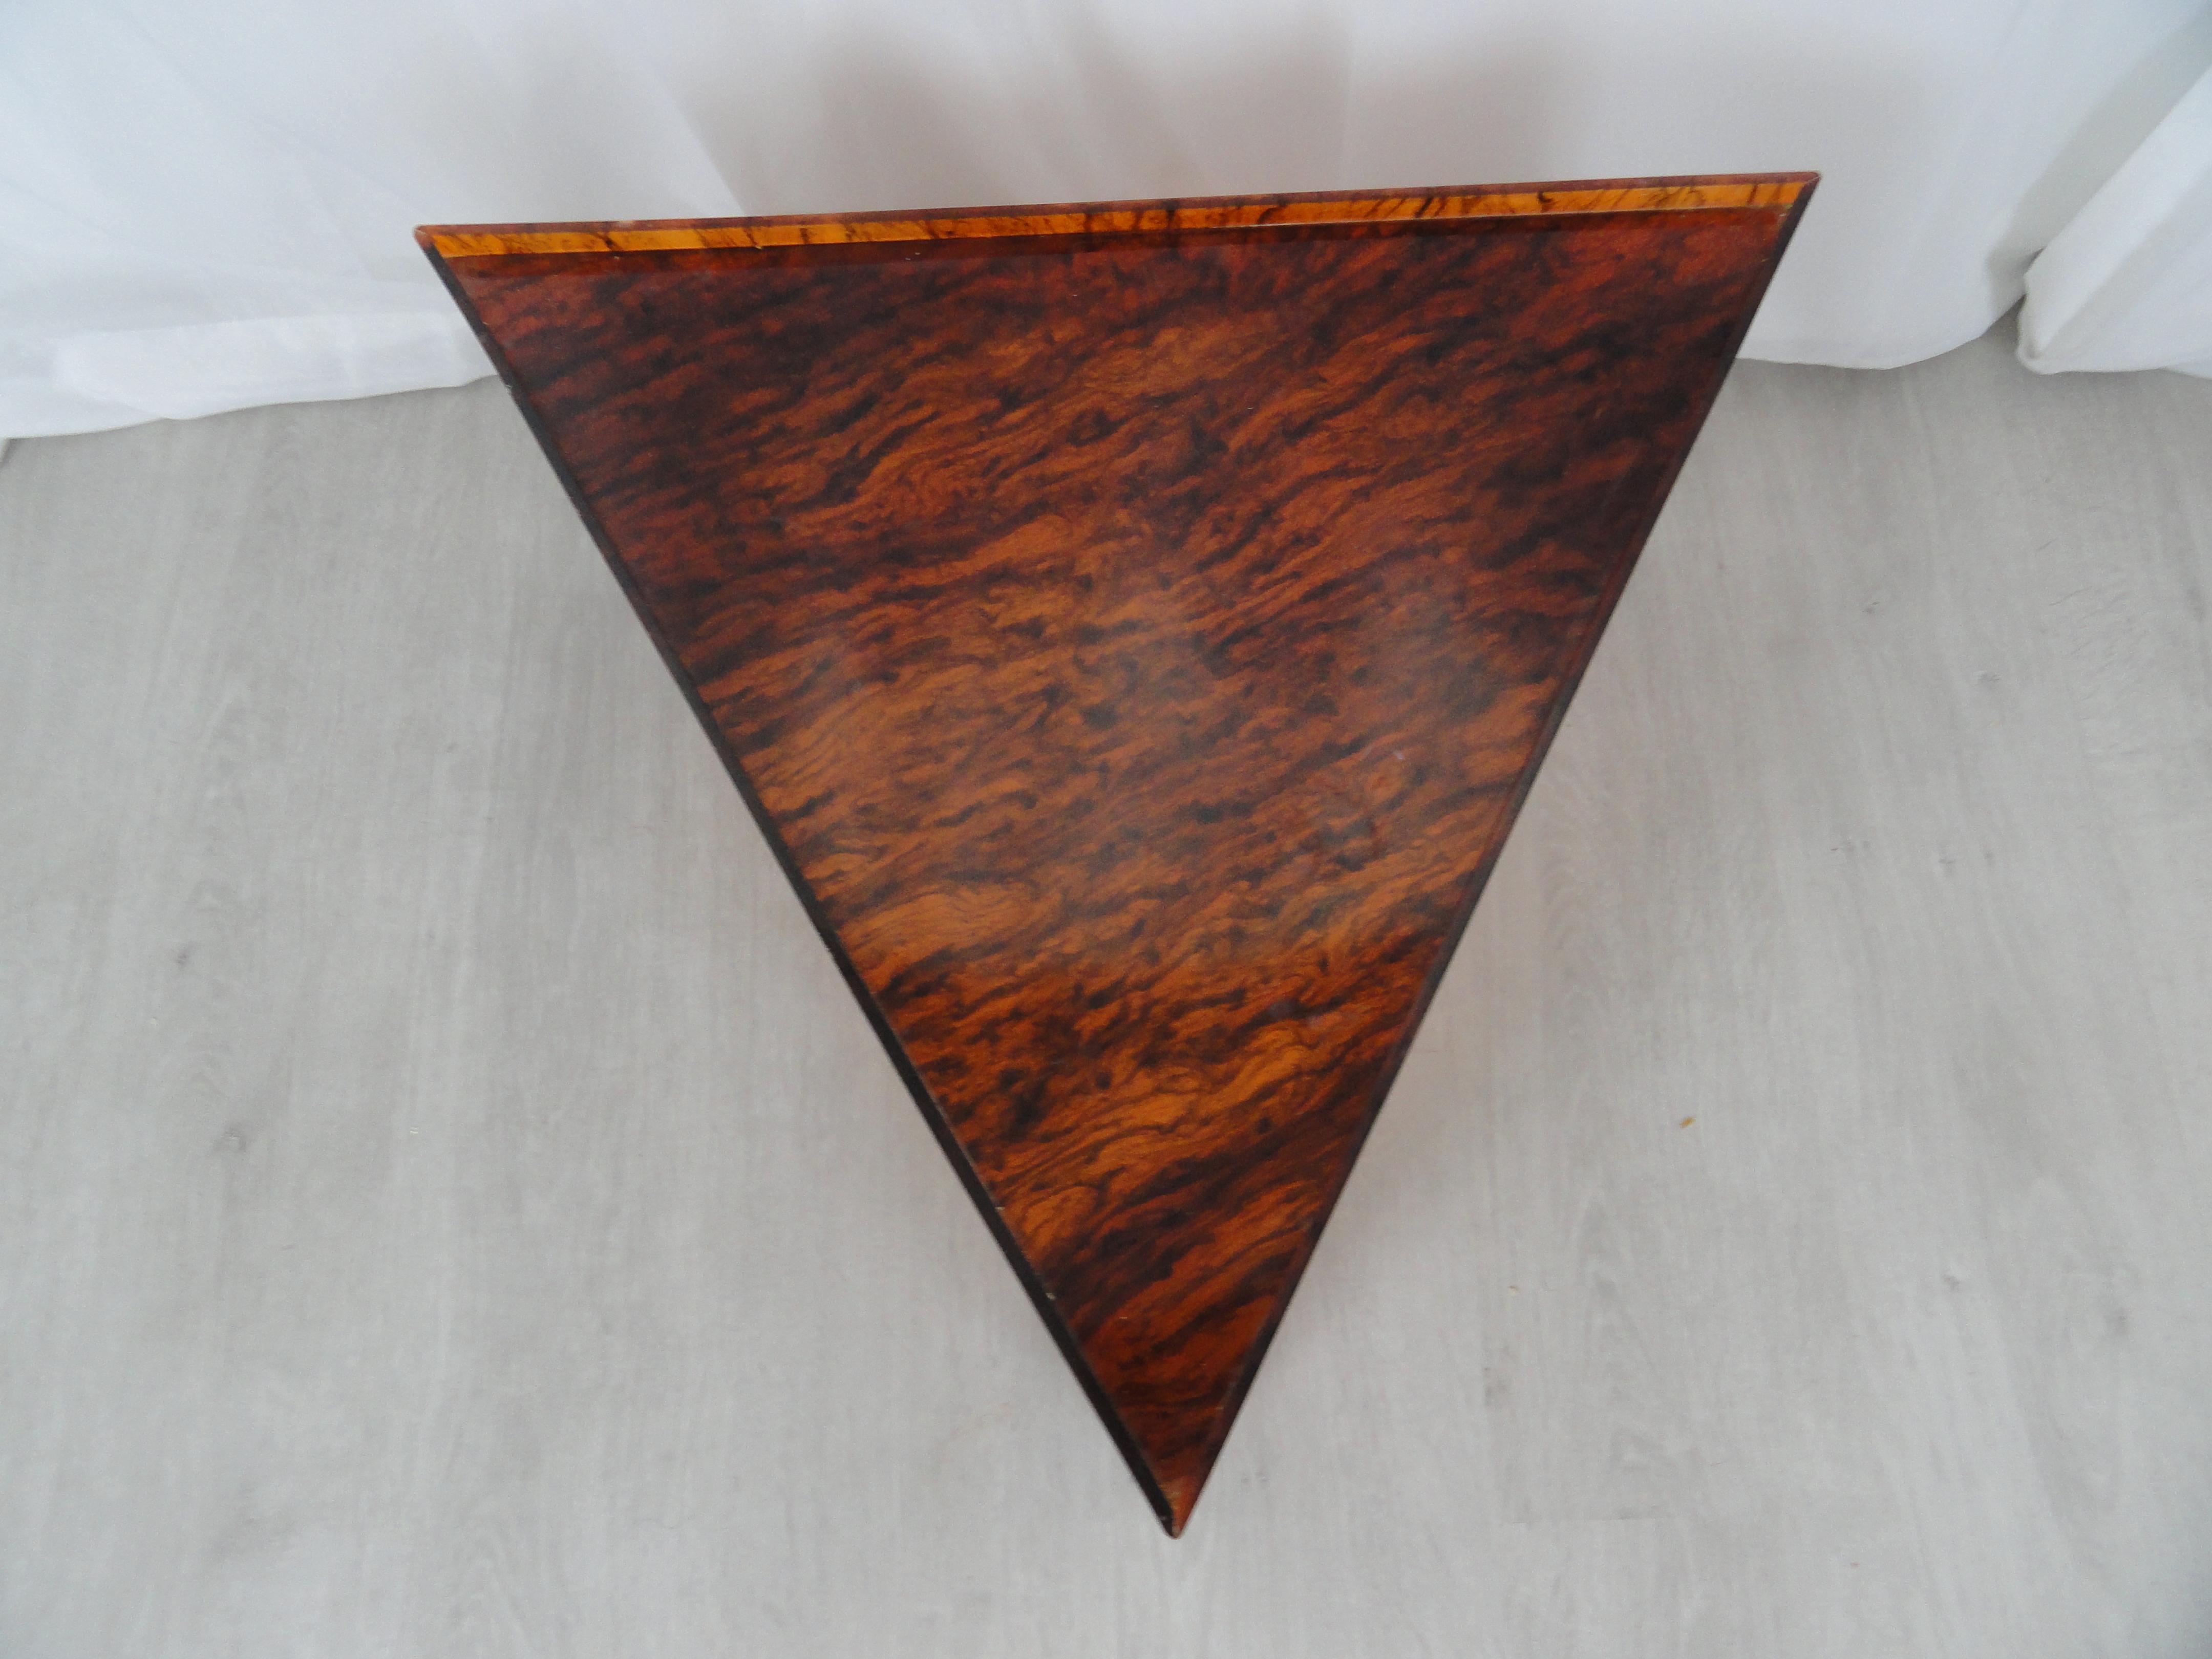 Faux tortoiseshell acrylic triangle table. Measures 12